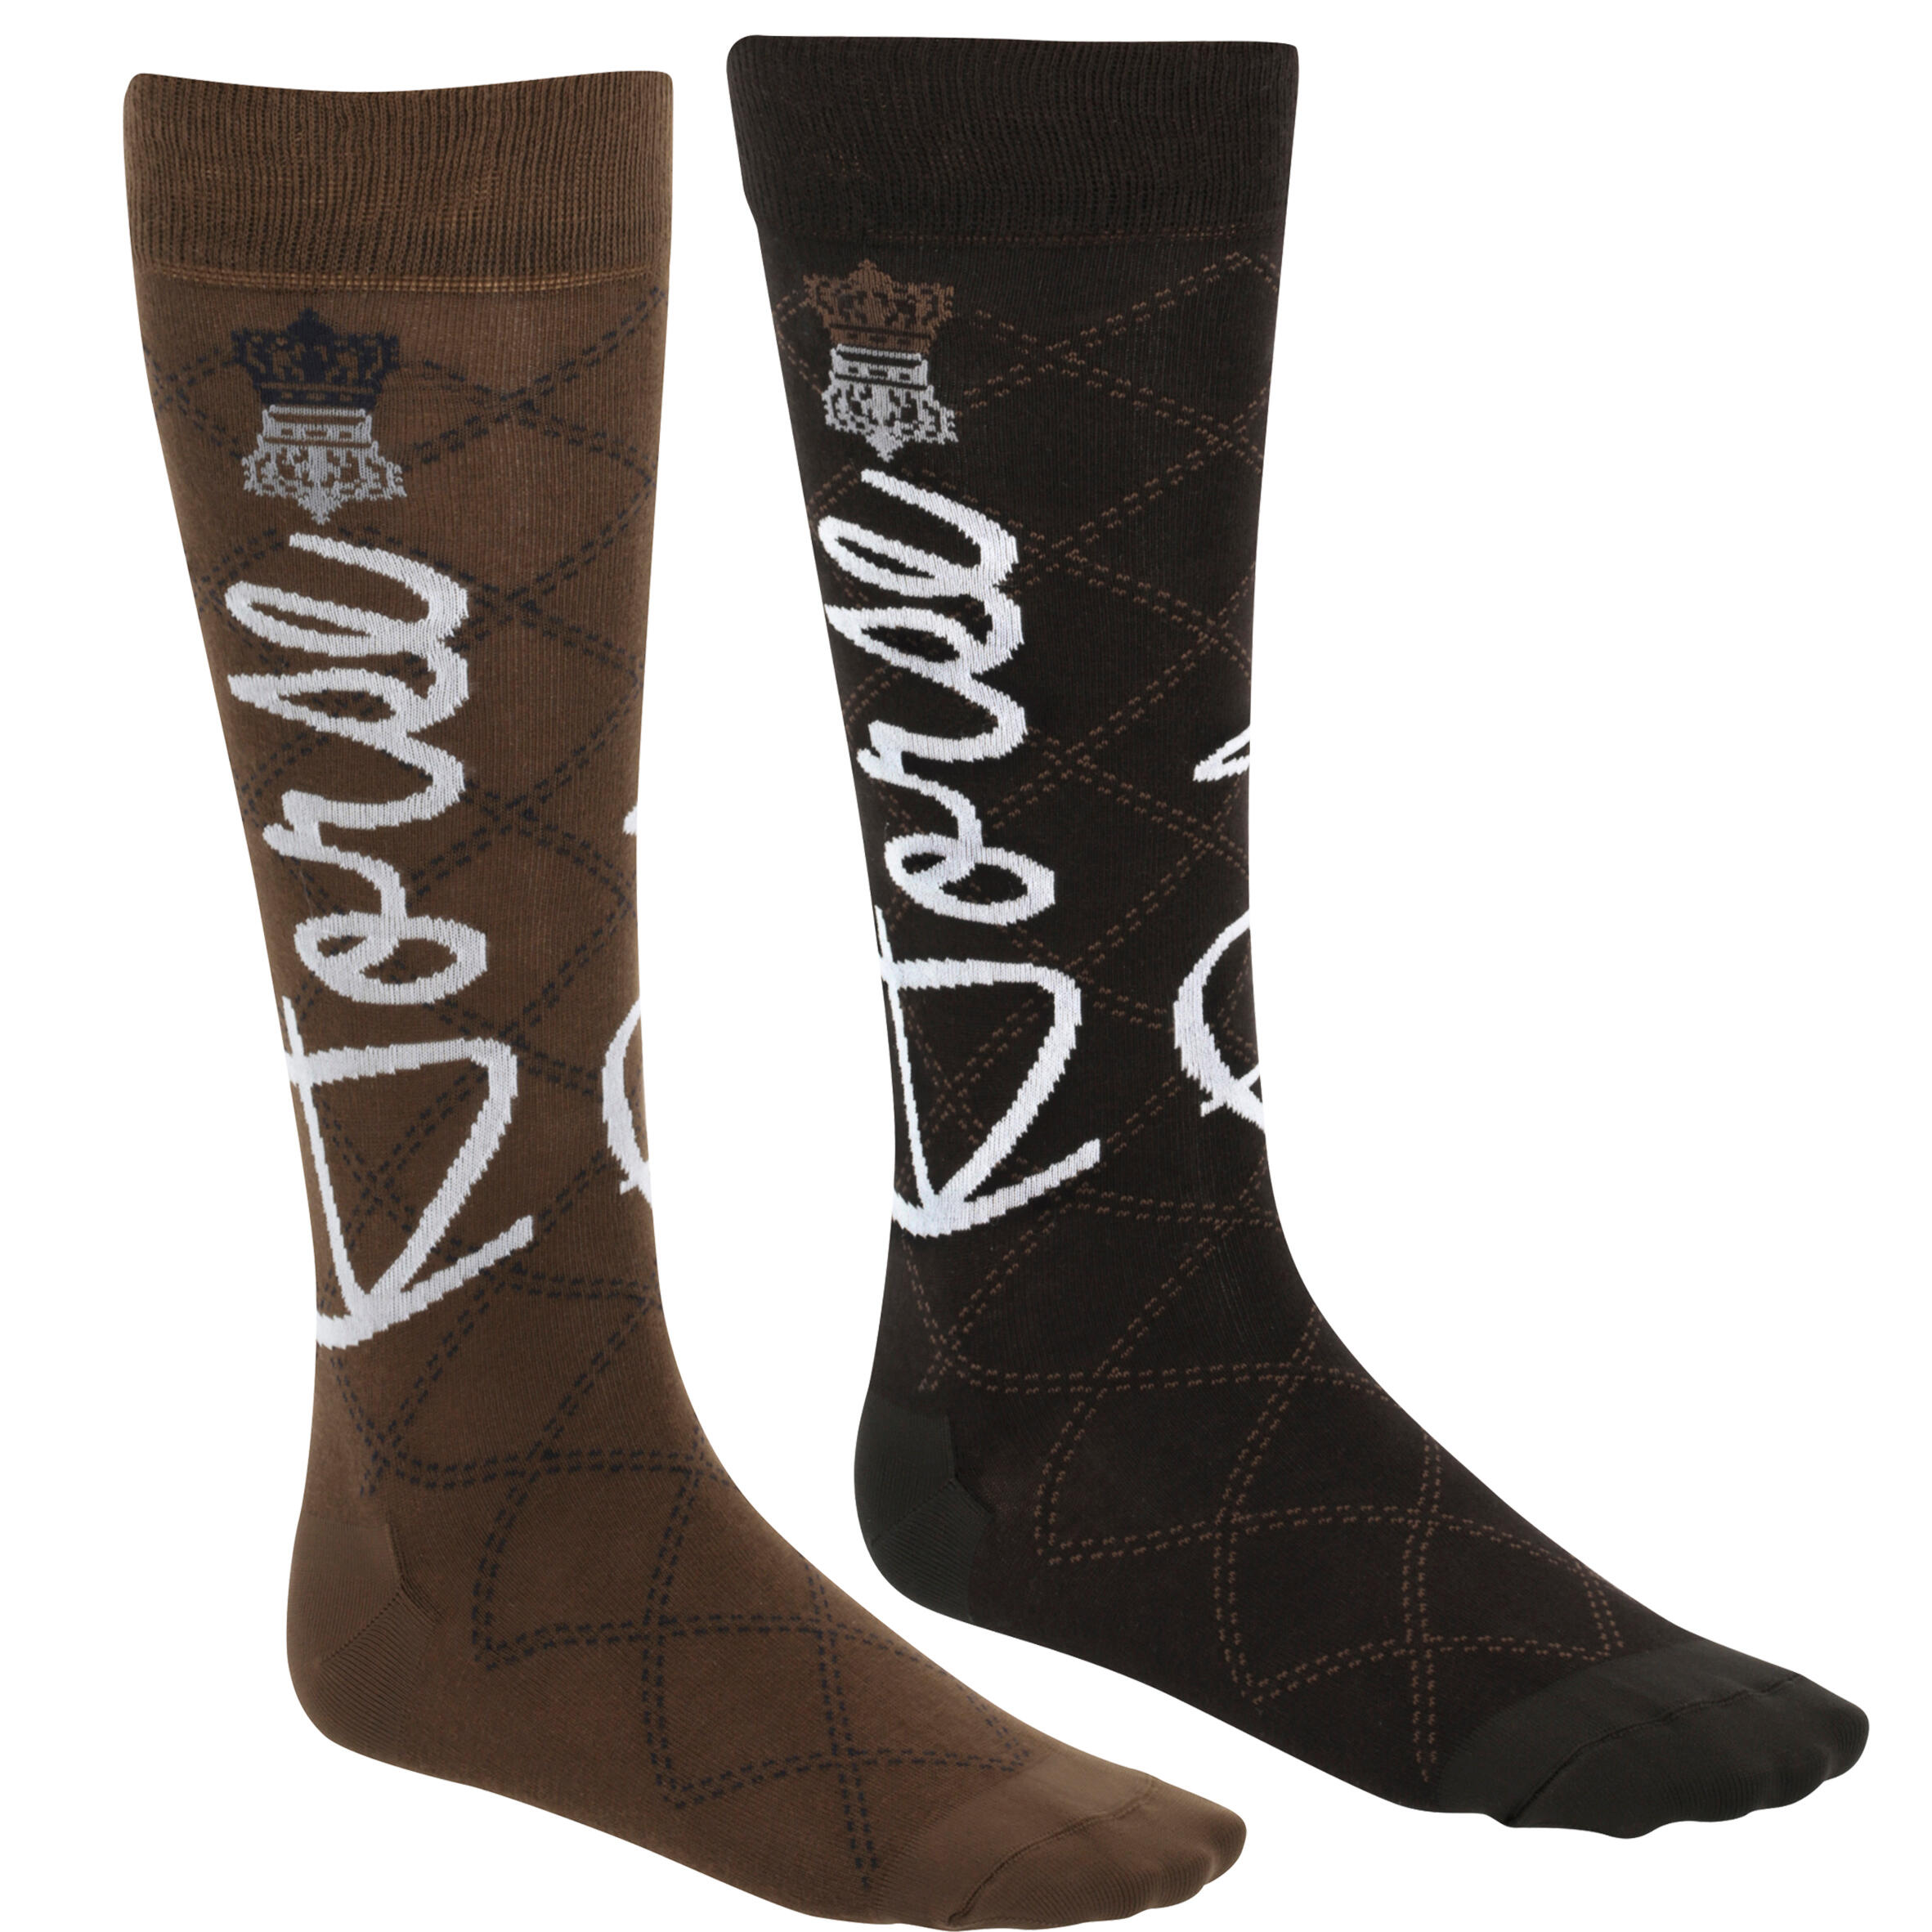 FOUGANZA Adult Horse Riding Lightweight Socks 2-Pair Pack - Light Brown/Dark Brown